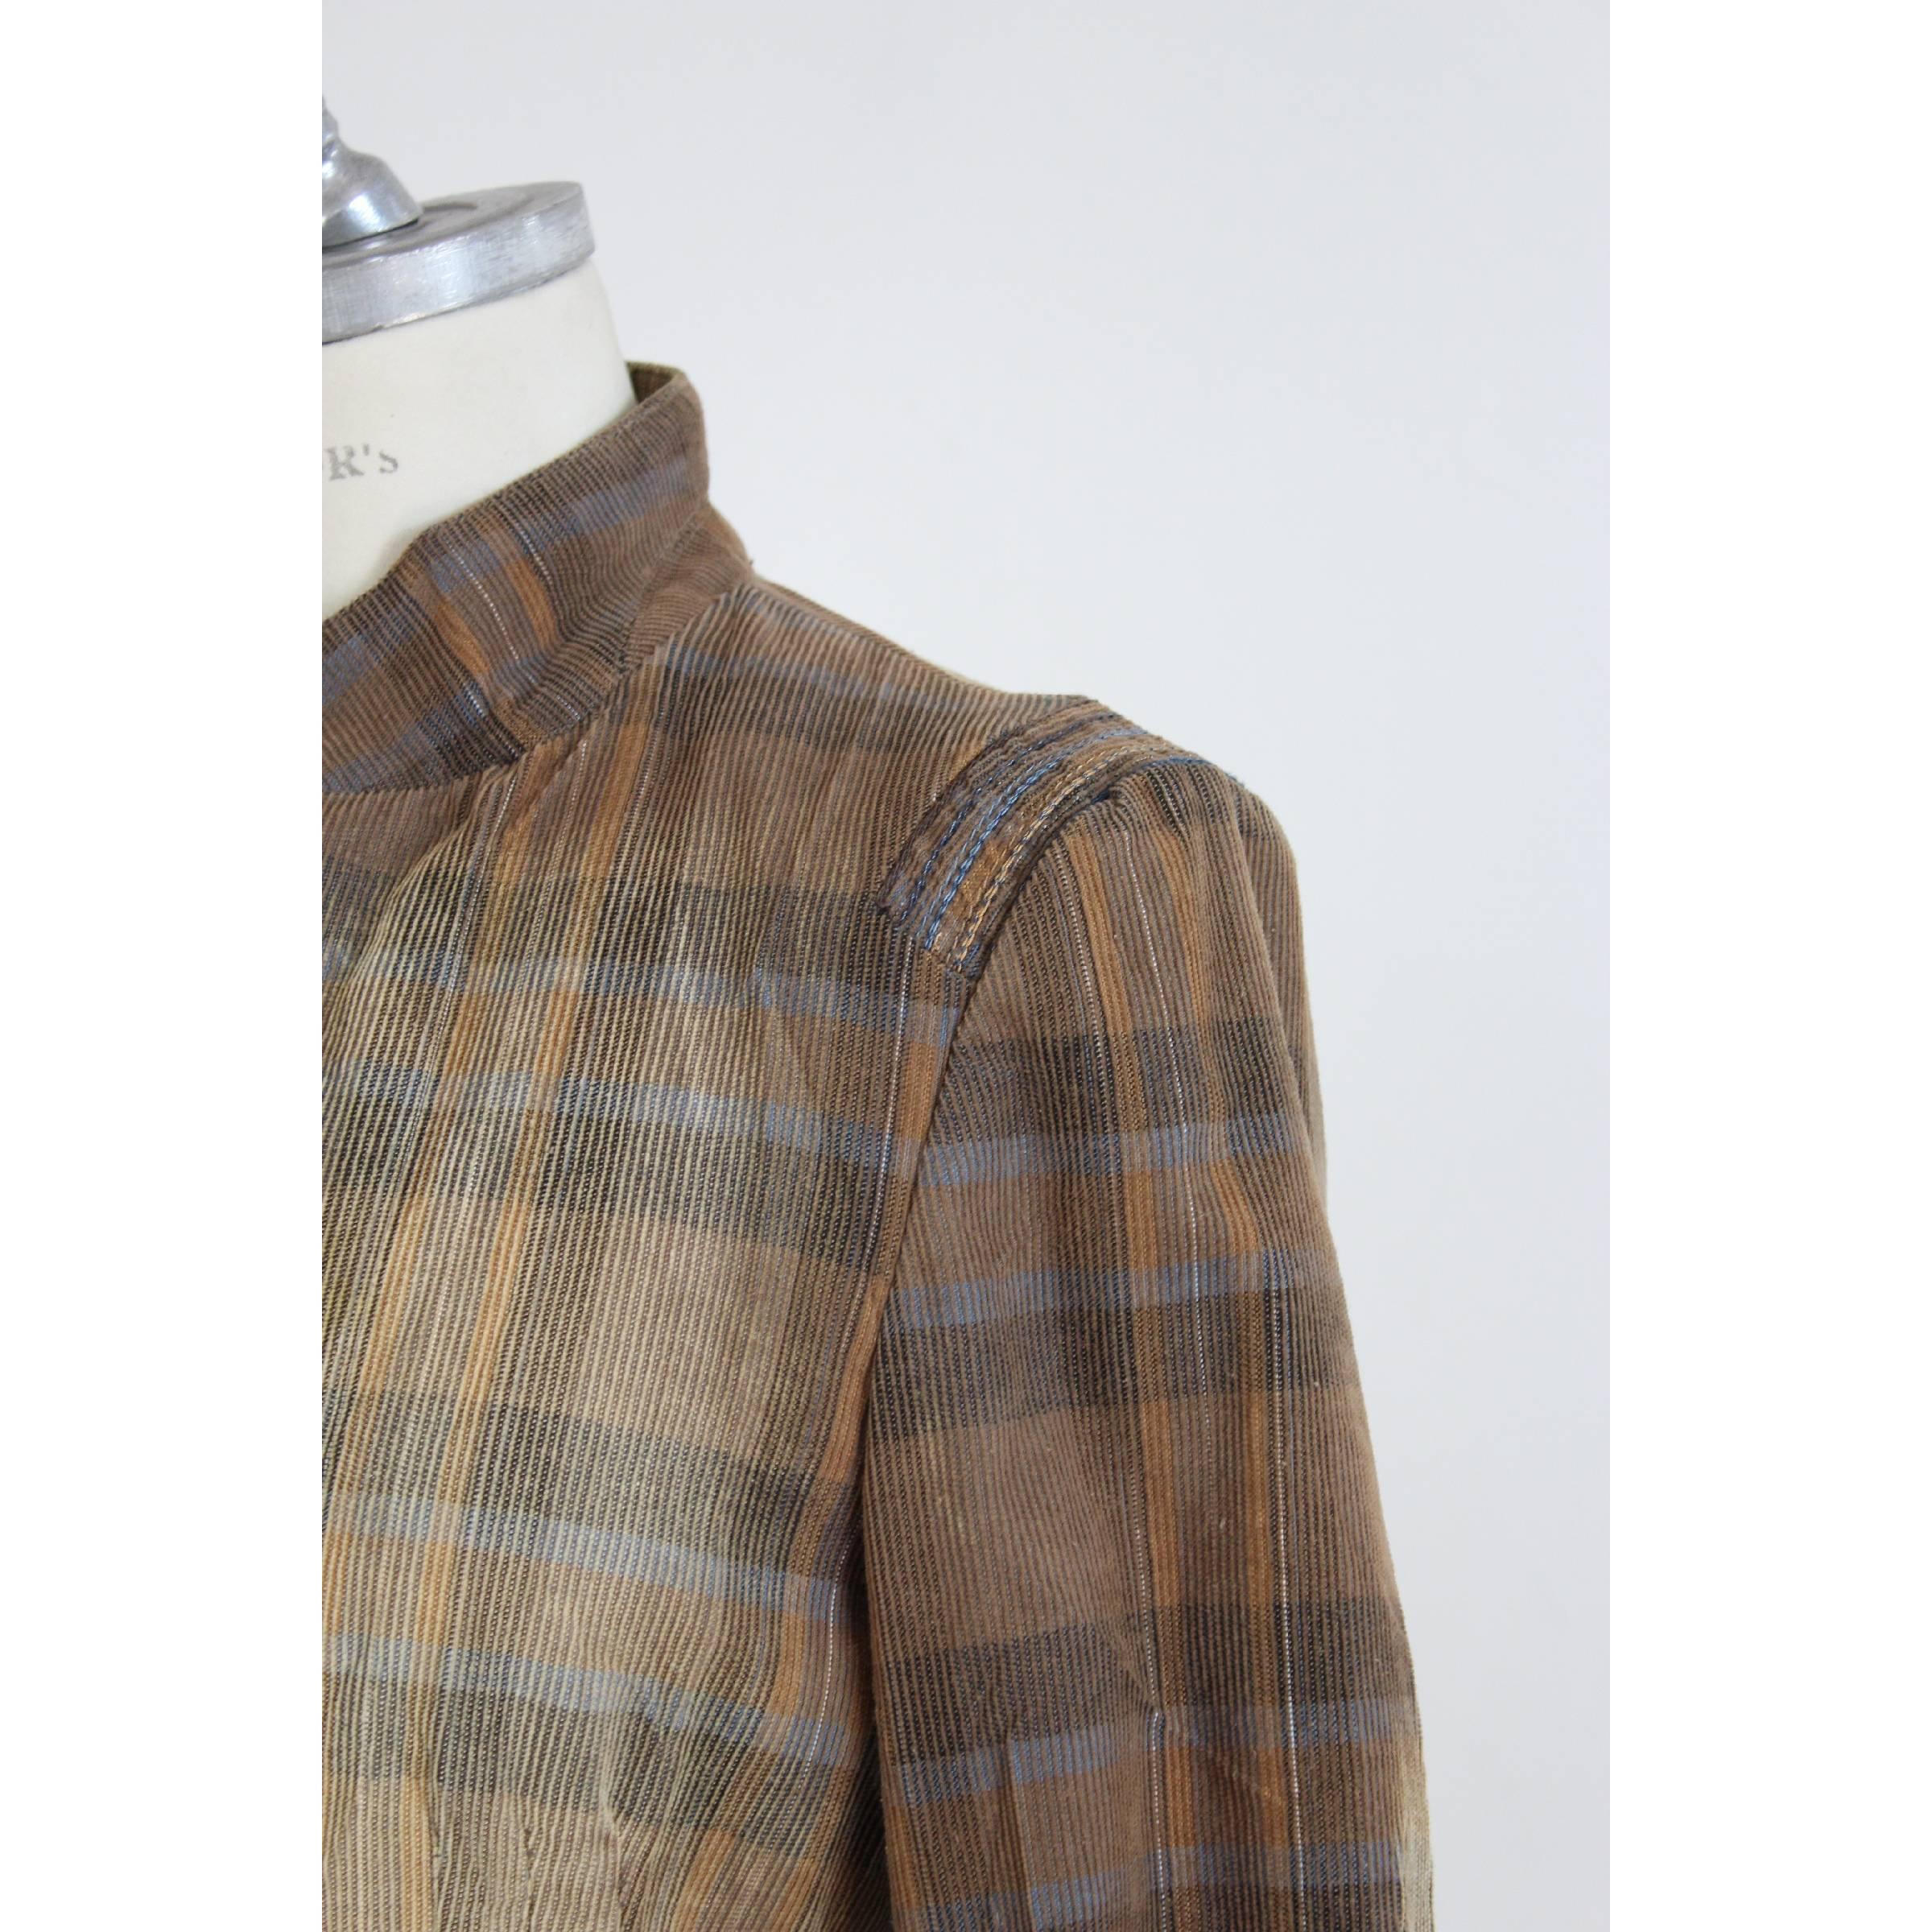 Marithe Francois Girbaud Blazer Brown Cotton Jacket, 1990s For Sale 1